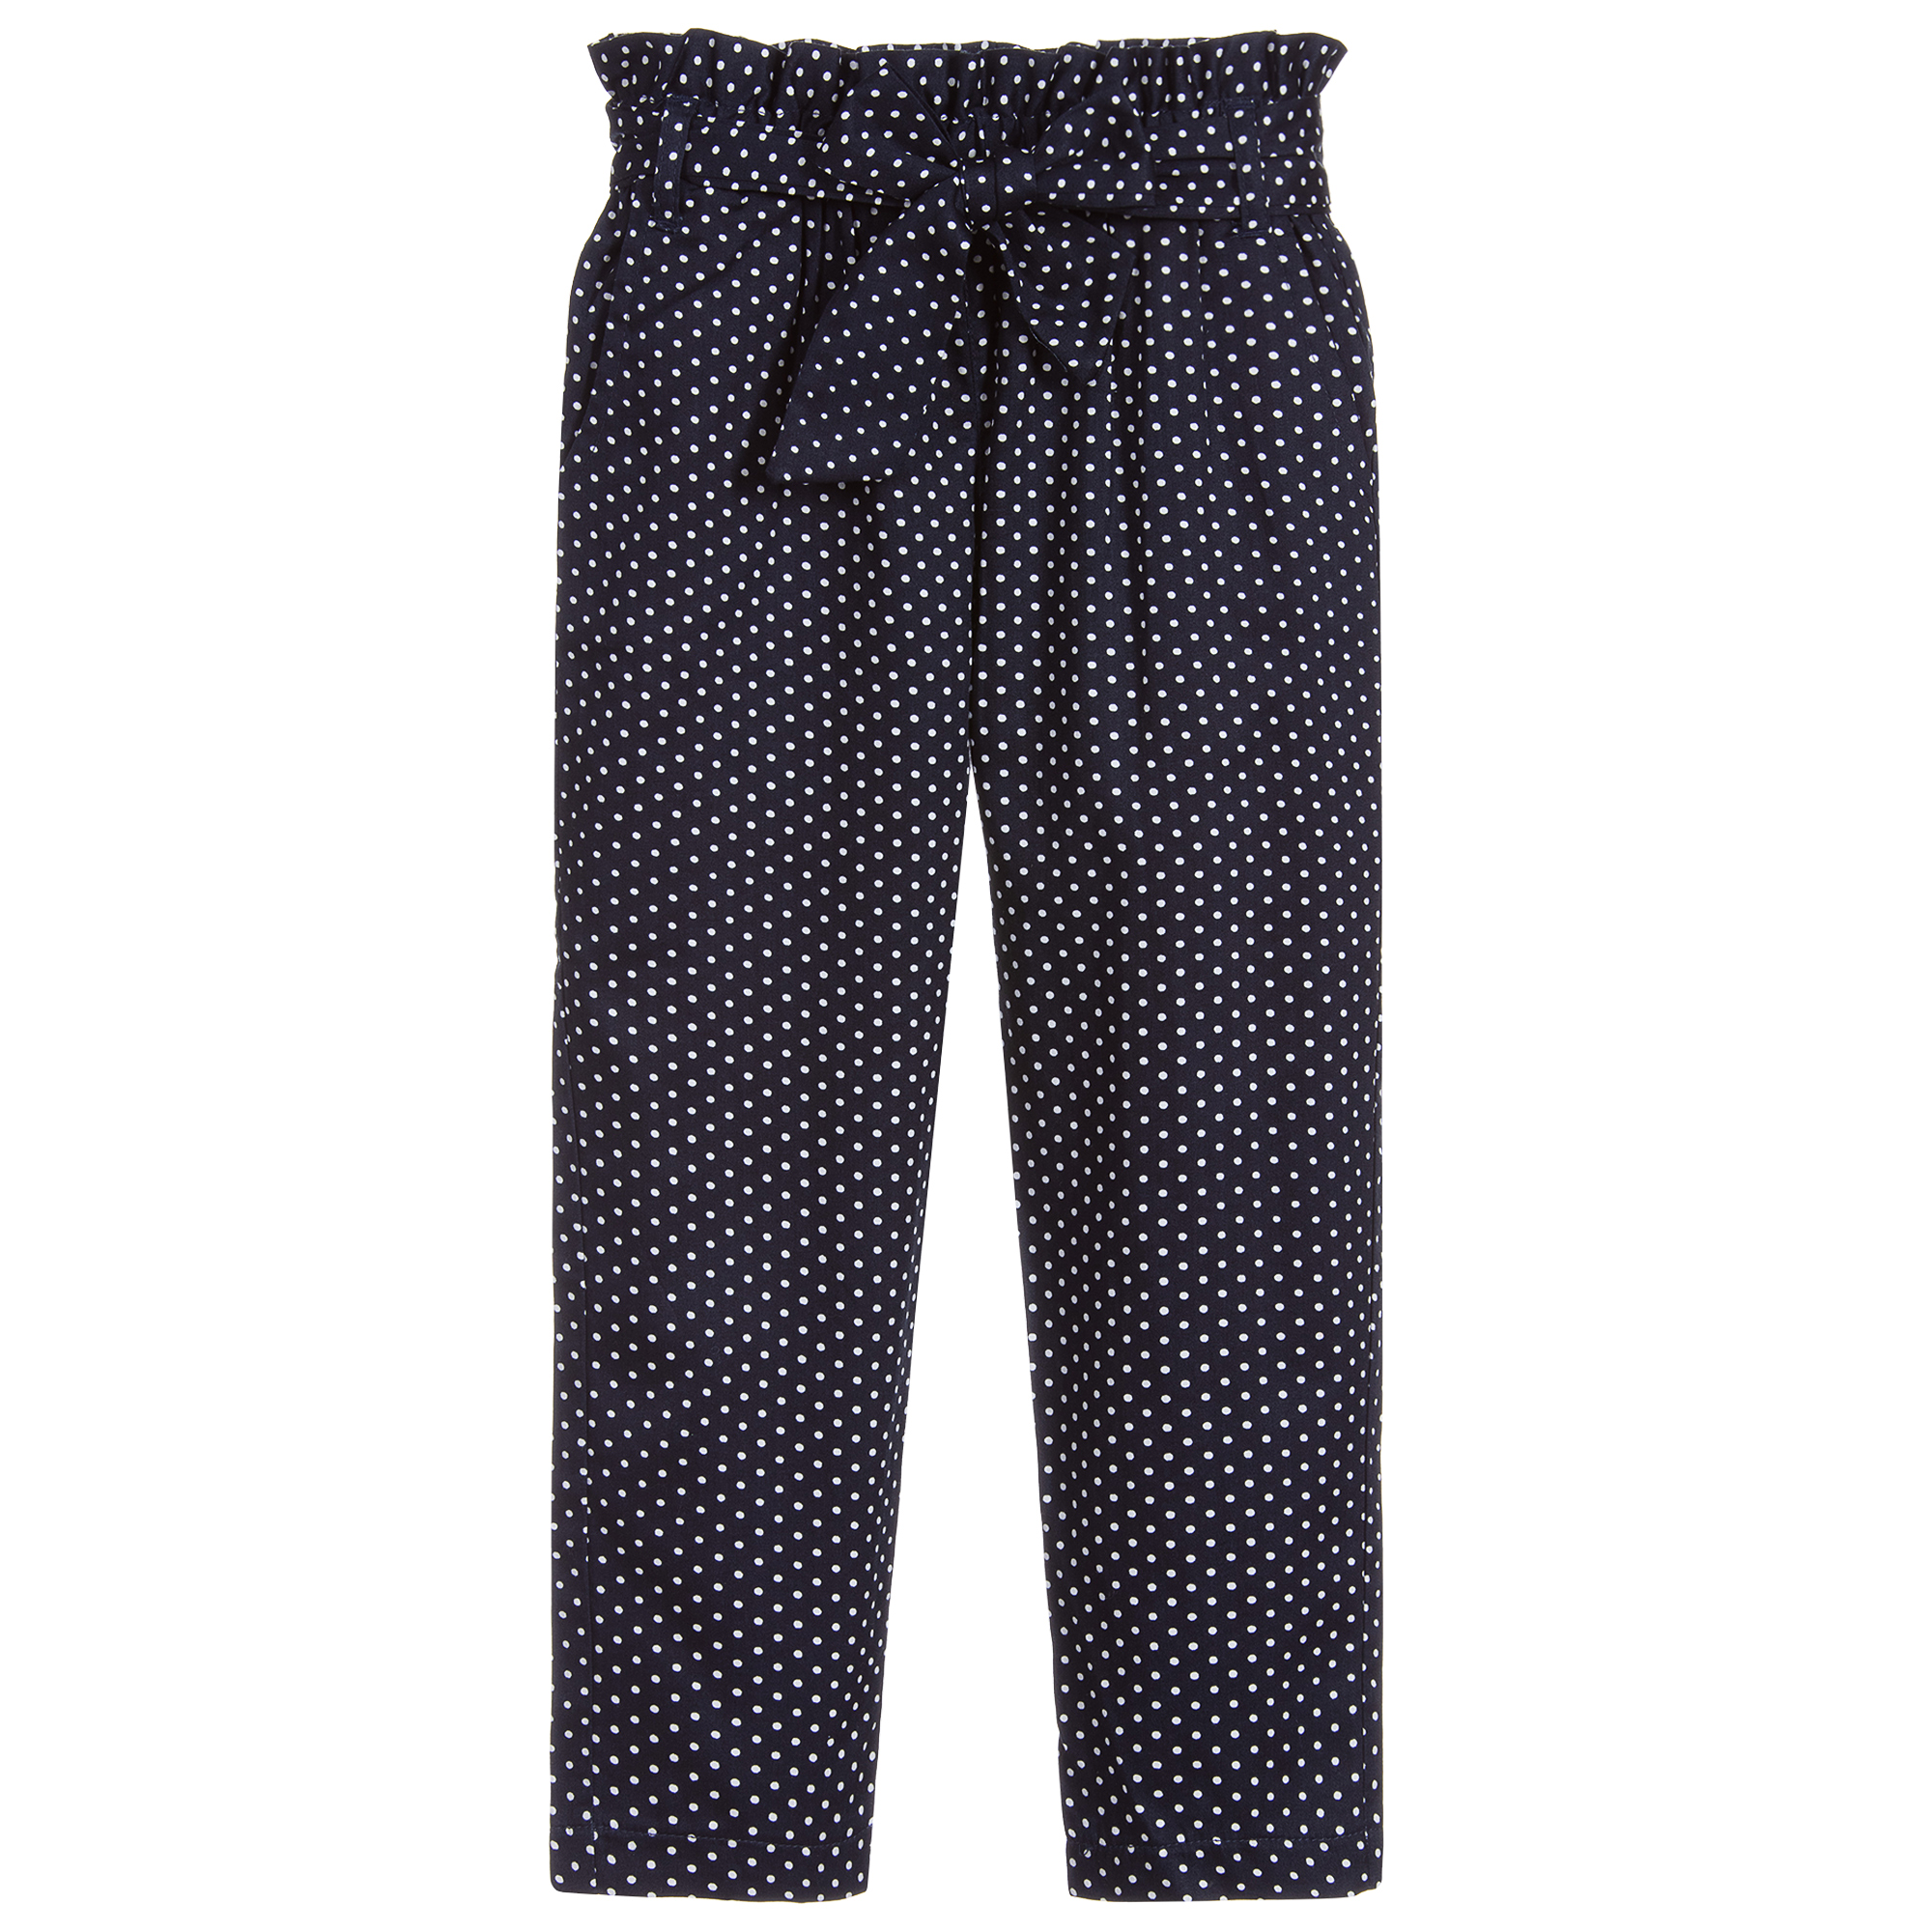 black and white polka dot trousers